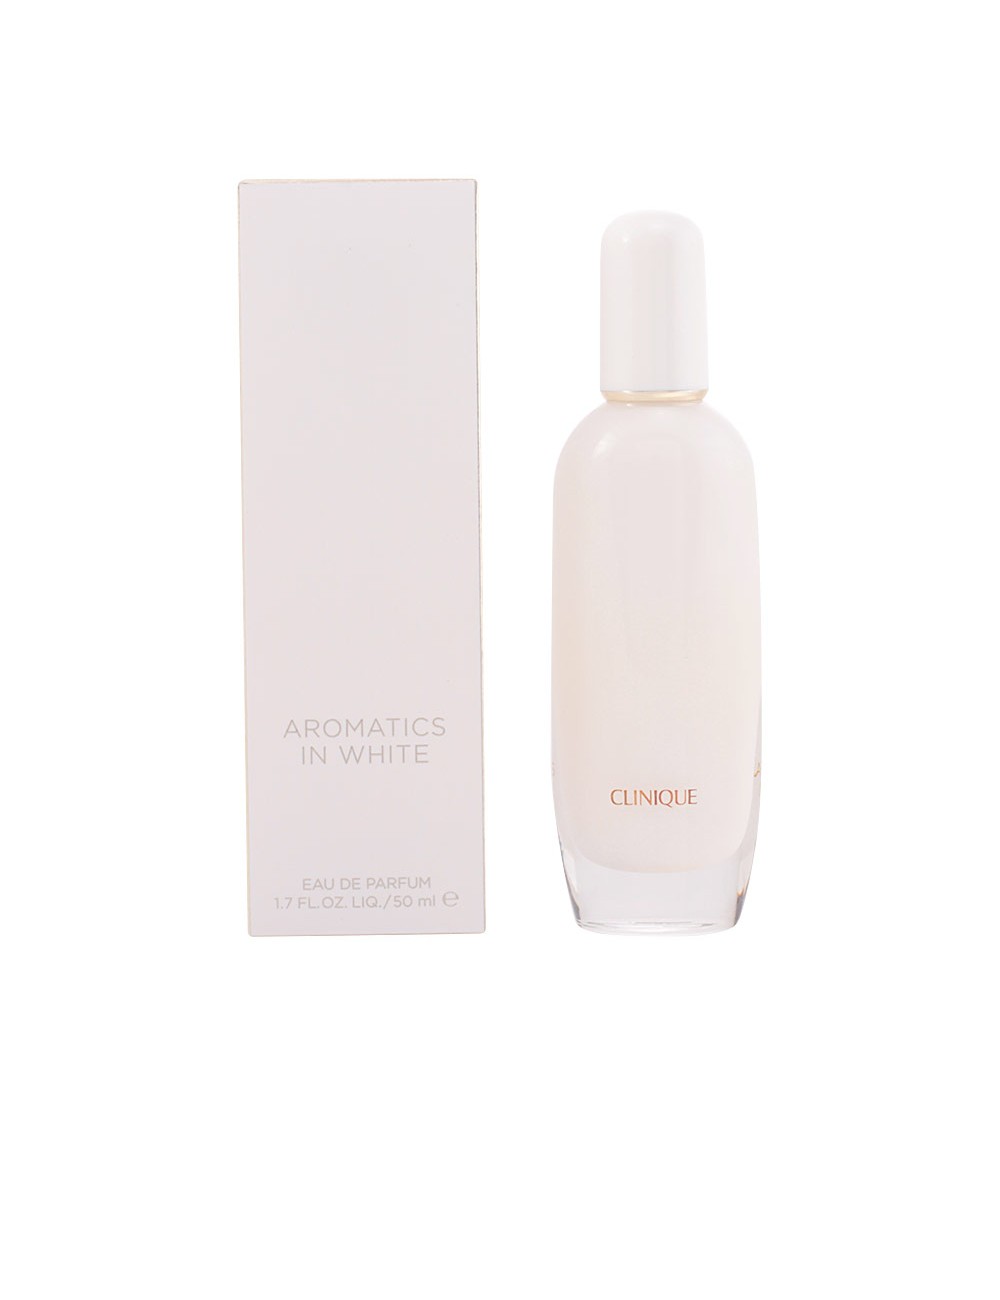 AROMATICS IN WHITE eau de parfum vaporisateur 50 ml